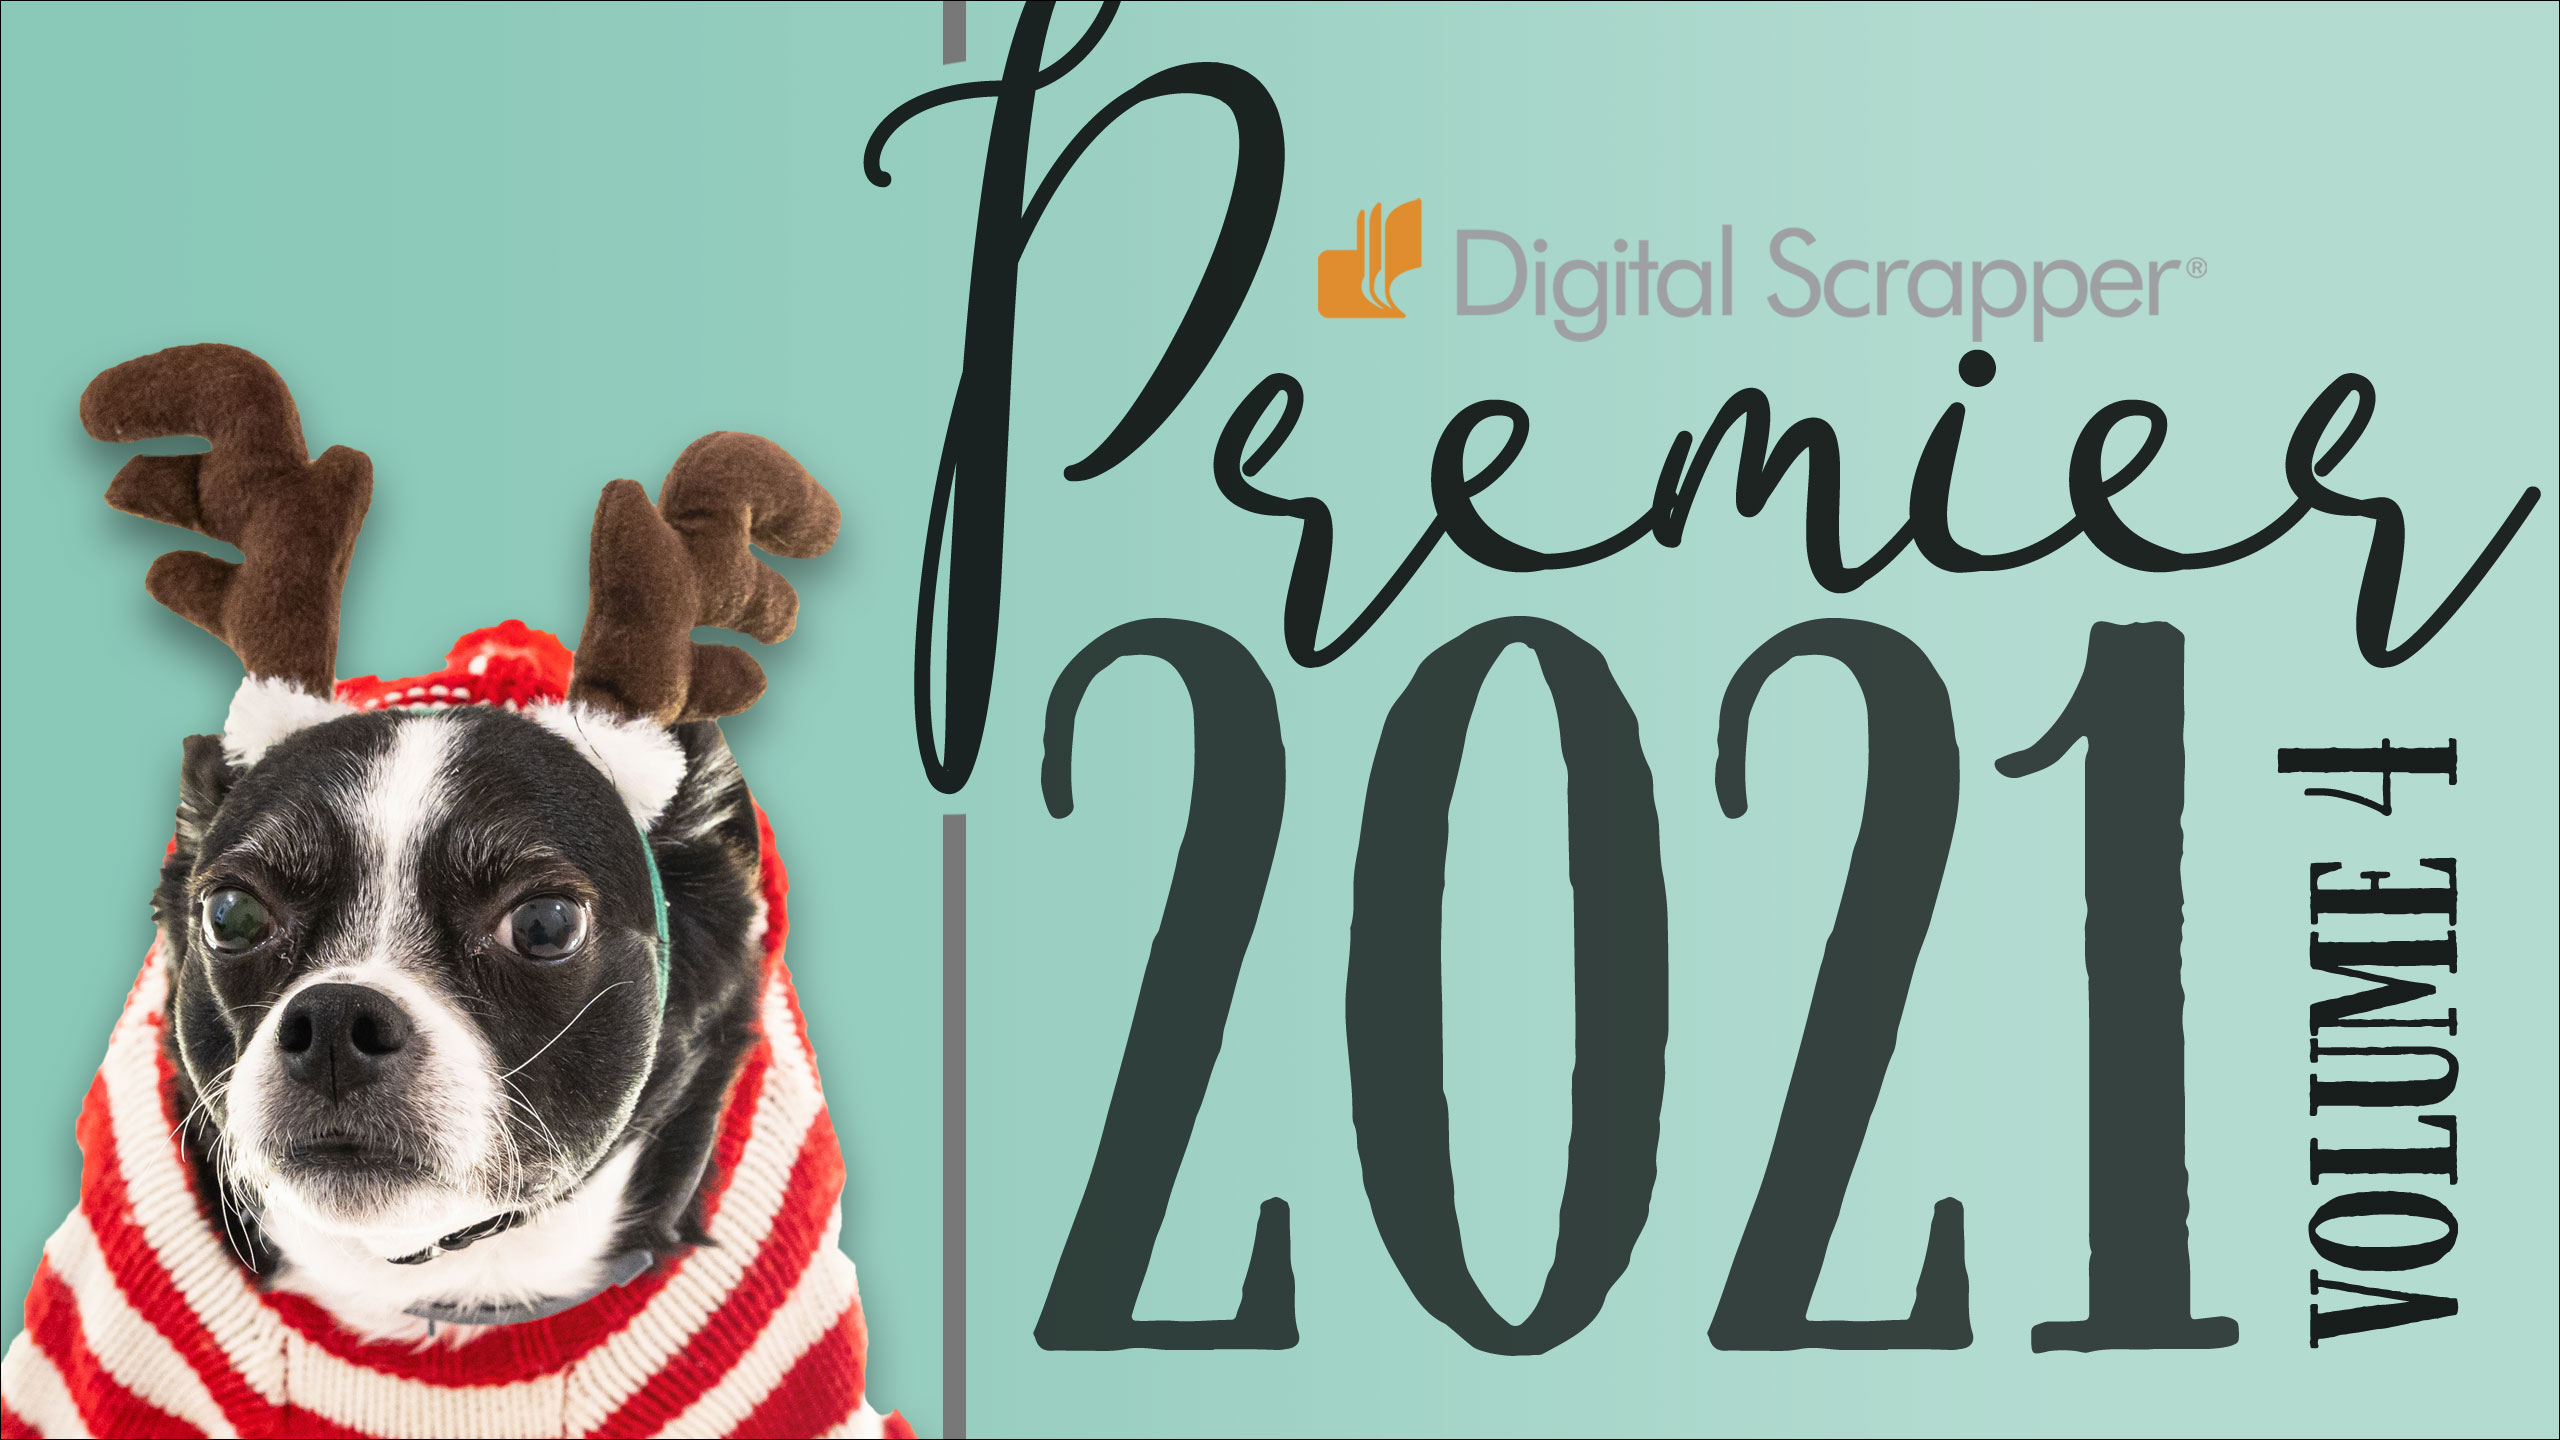 Digital Scrapper Premier 2021, Volume 4